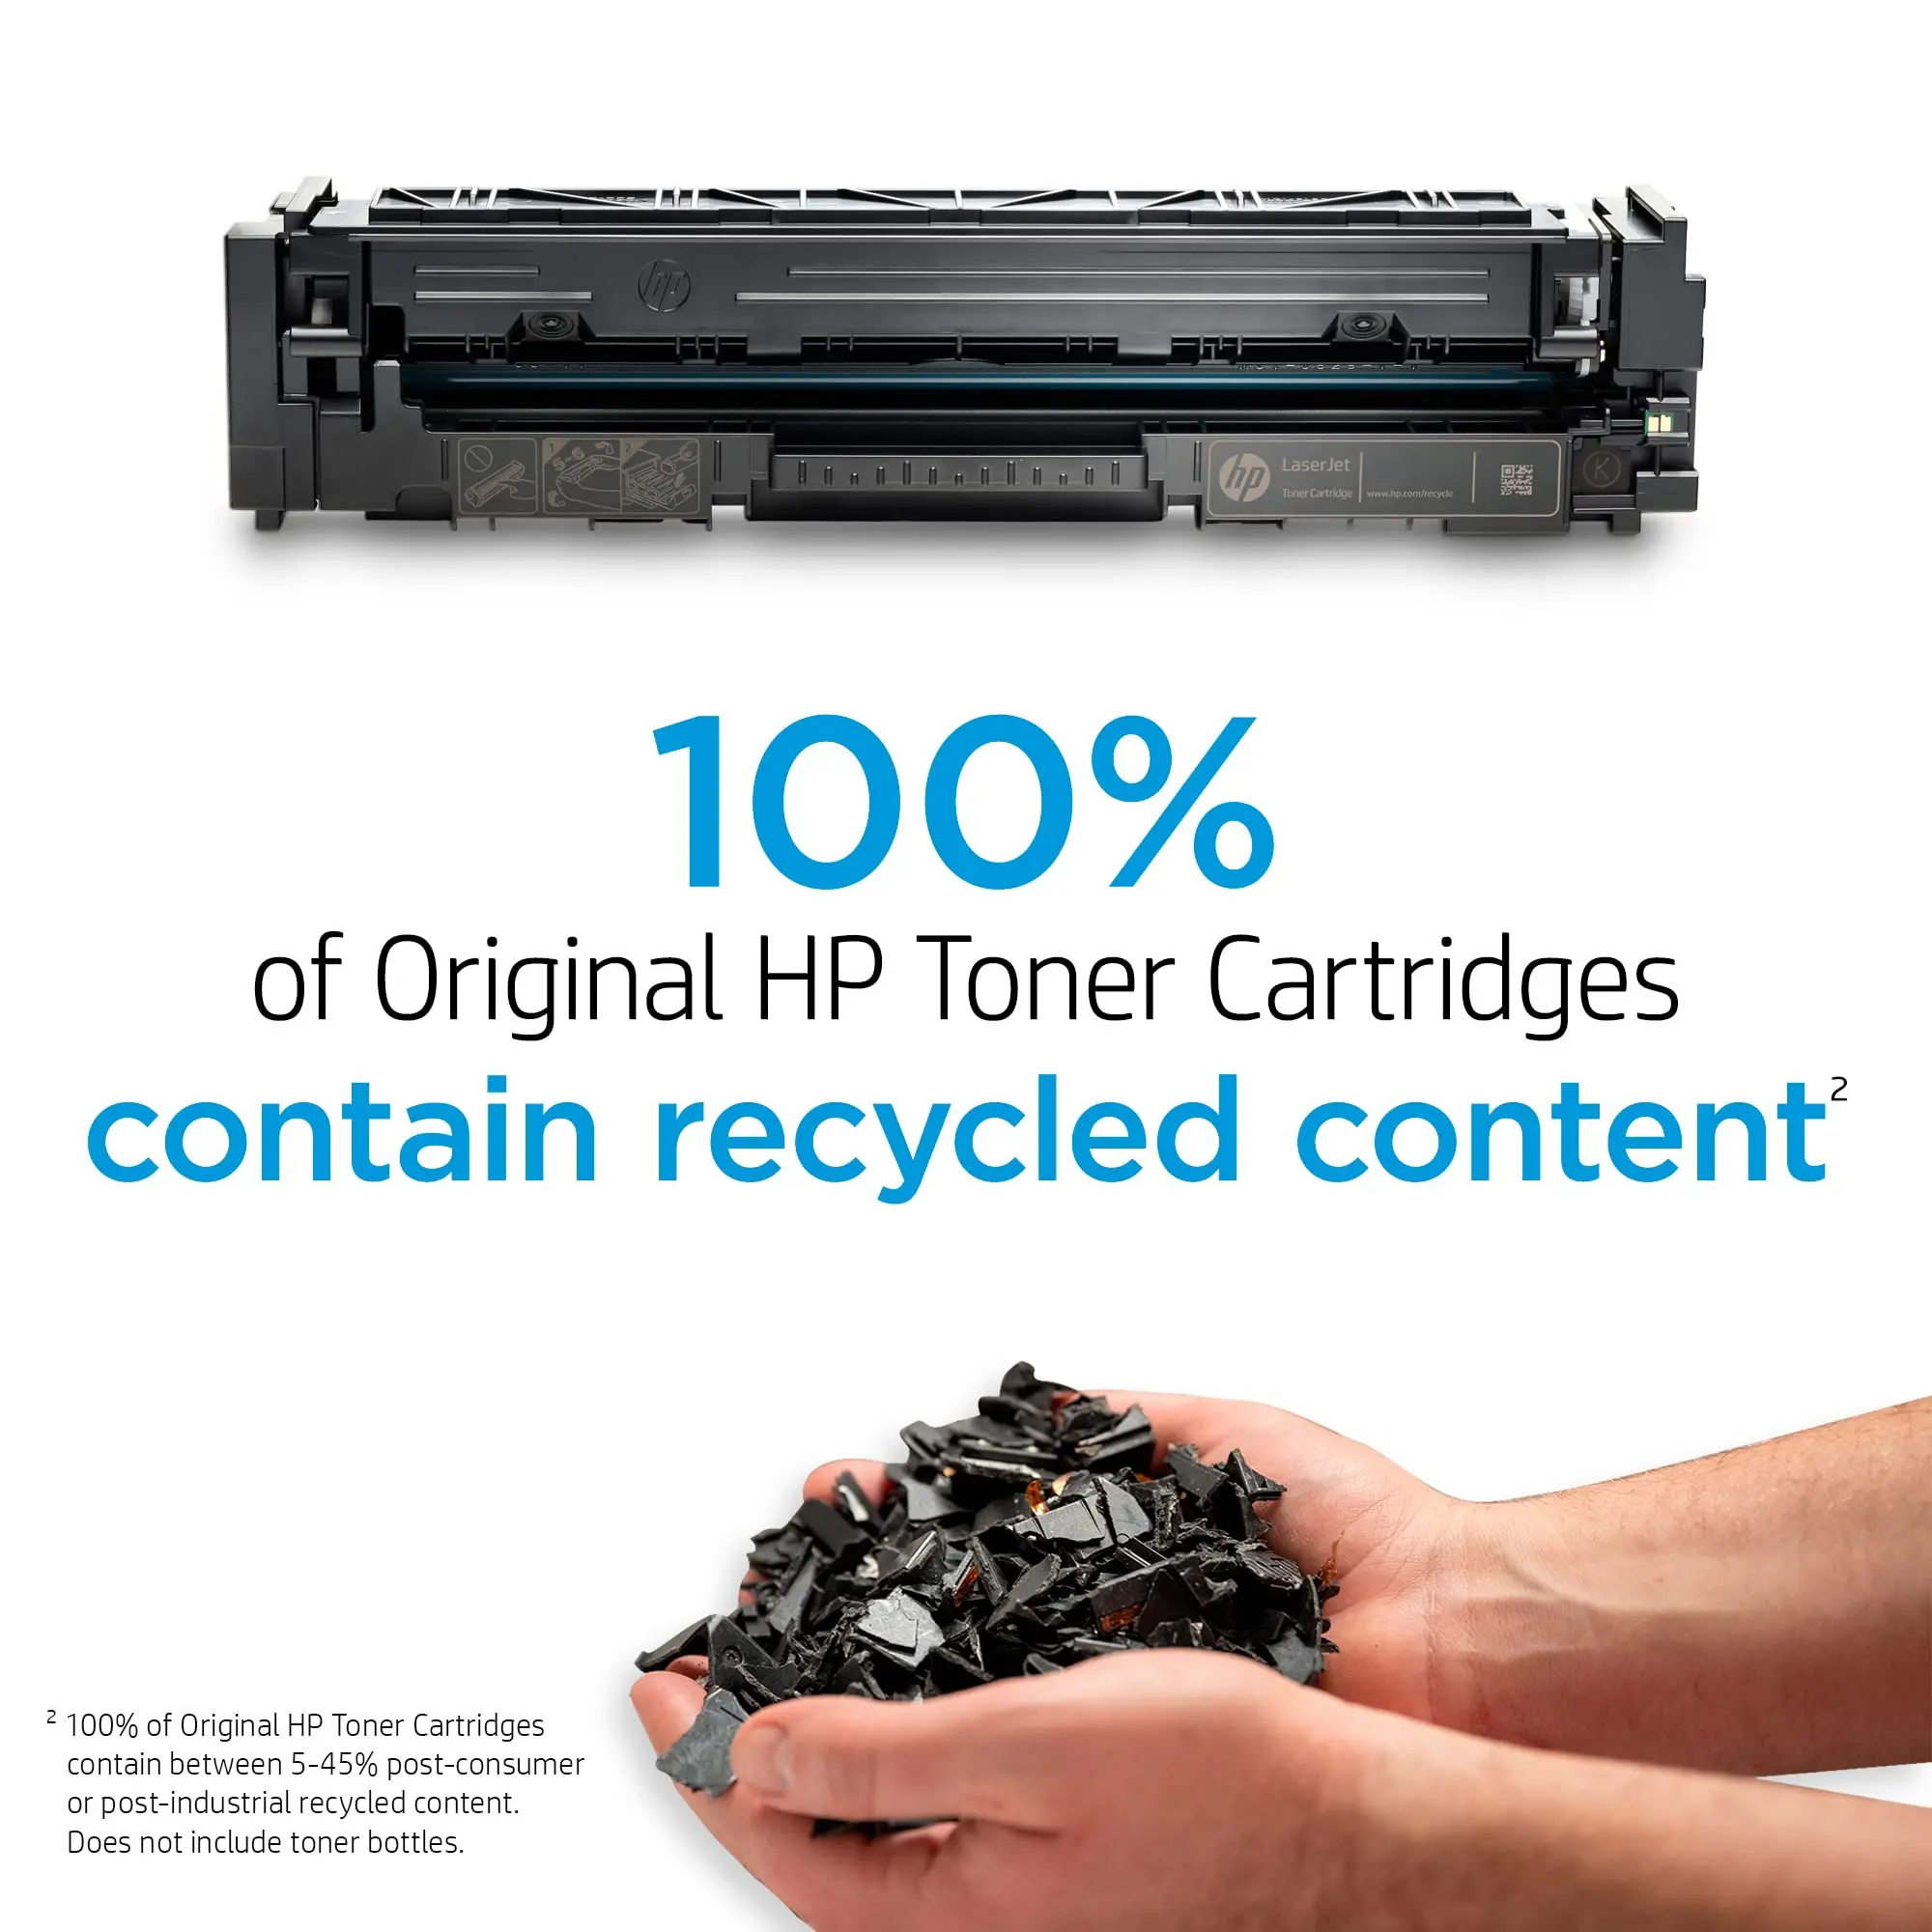 hewlett packard h505a - What printer uses 05A toner cartridge